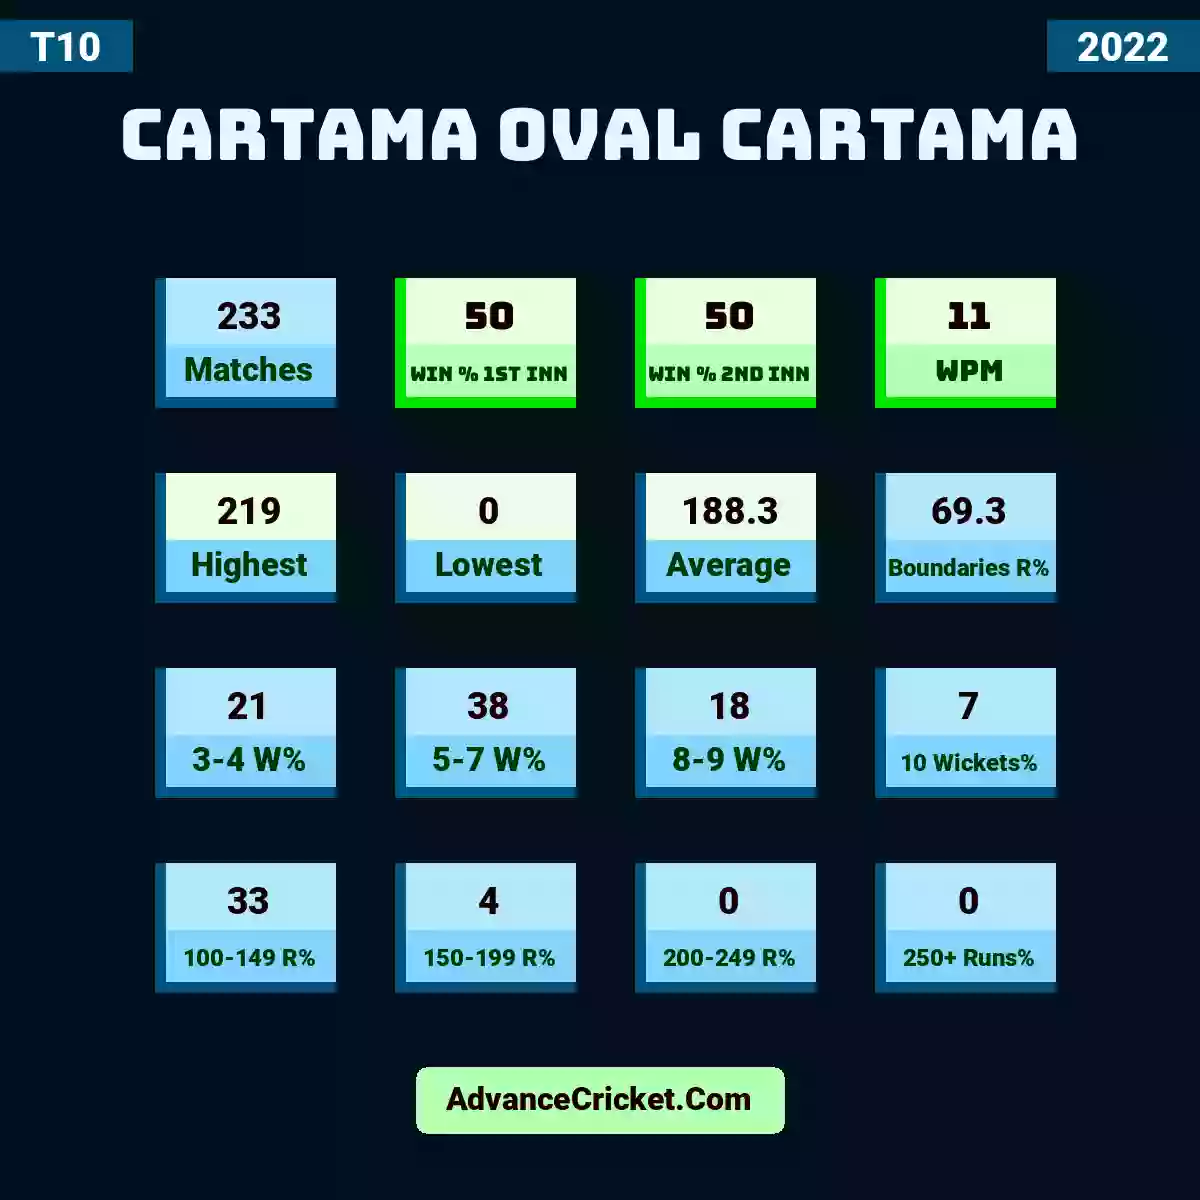 Image showing Cartama Oval Cartama with Matches: 233, Win % 1st Inn: 50, Win % 2nd Inn: 50, WPM: 11, Highest: 219, Lowest: 0, Average: 188.3, Boundaries R%: 69.3, 3-4 W%: 21, 5-7 W%: 38, 8-9 W%: 18, 10 Wickets%: 7, 100-149 R%: 33, 150-199 R%: 4, 200-249 R%: 0, 250+ Runs%: 0.